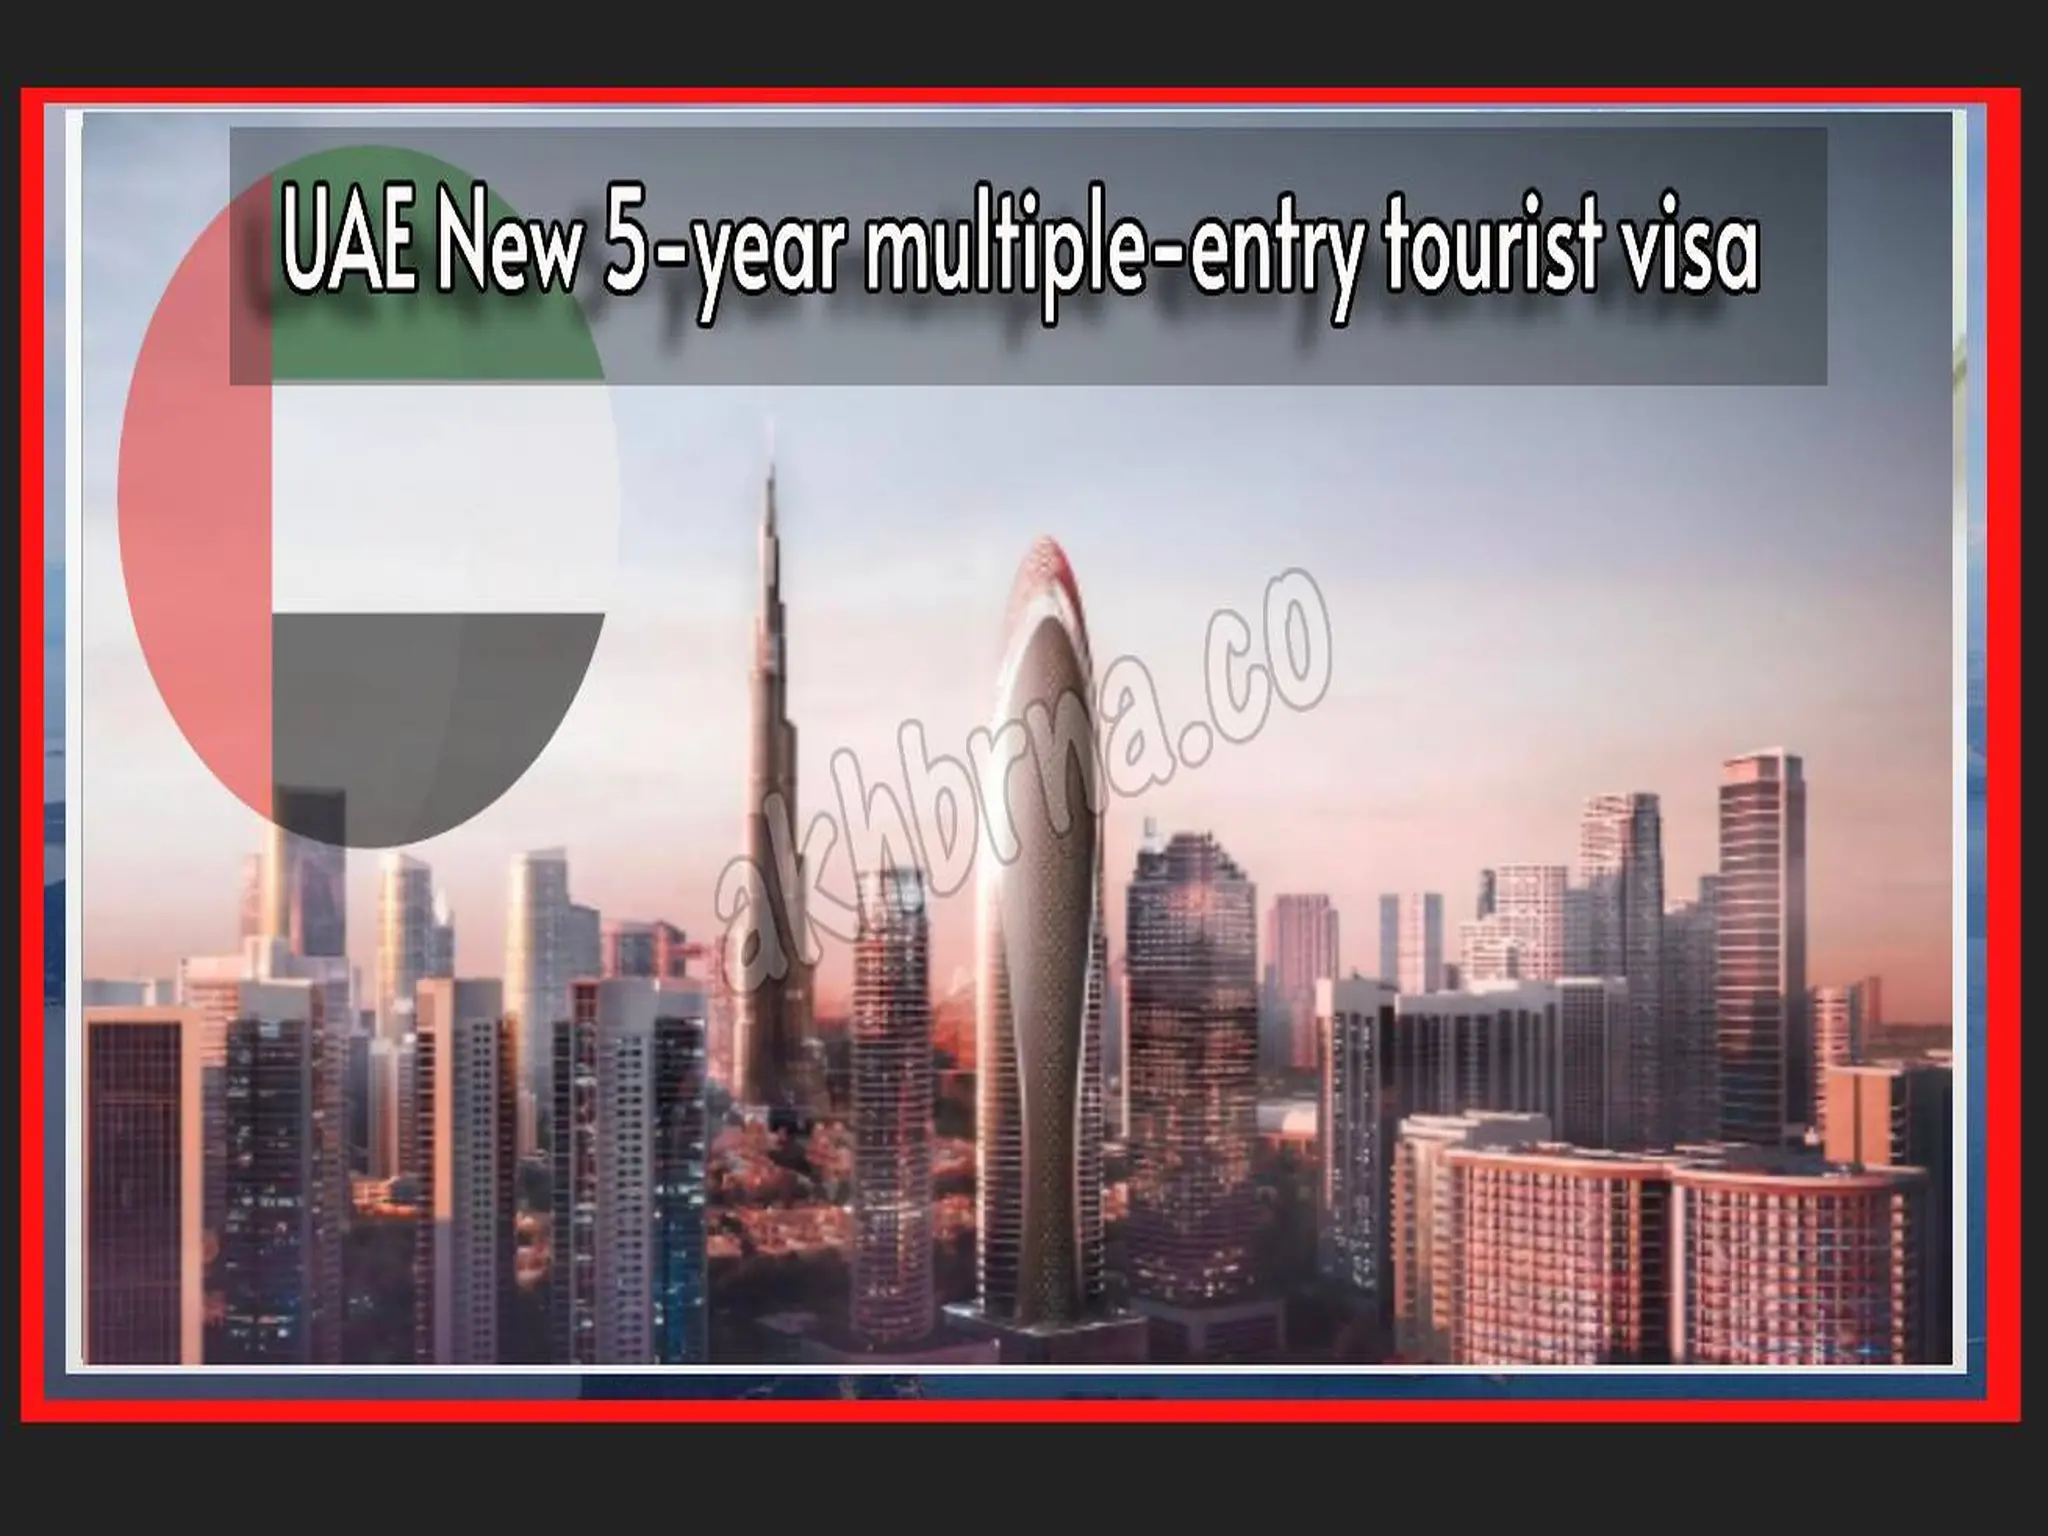 Dubai announces a new 5-year multiple-entry tourist visa in UAE ... Details